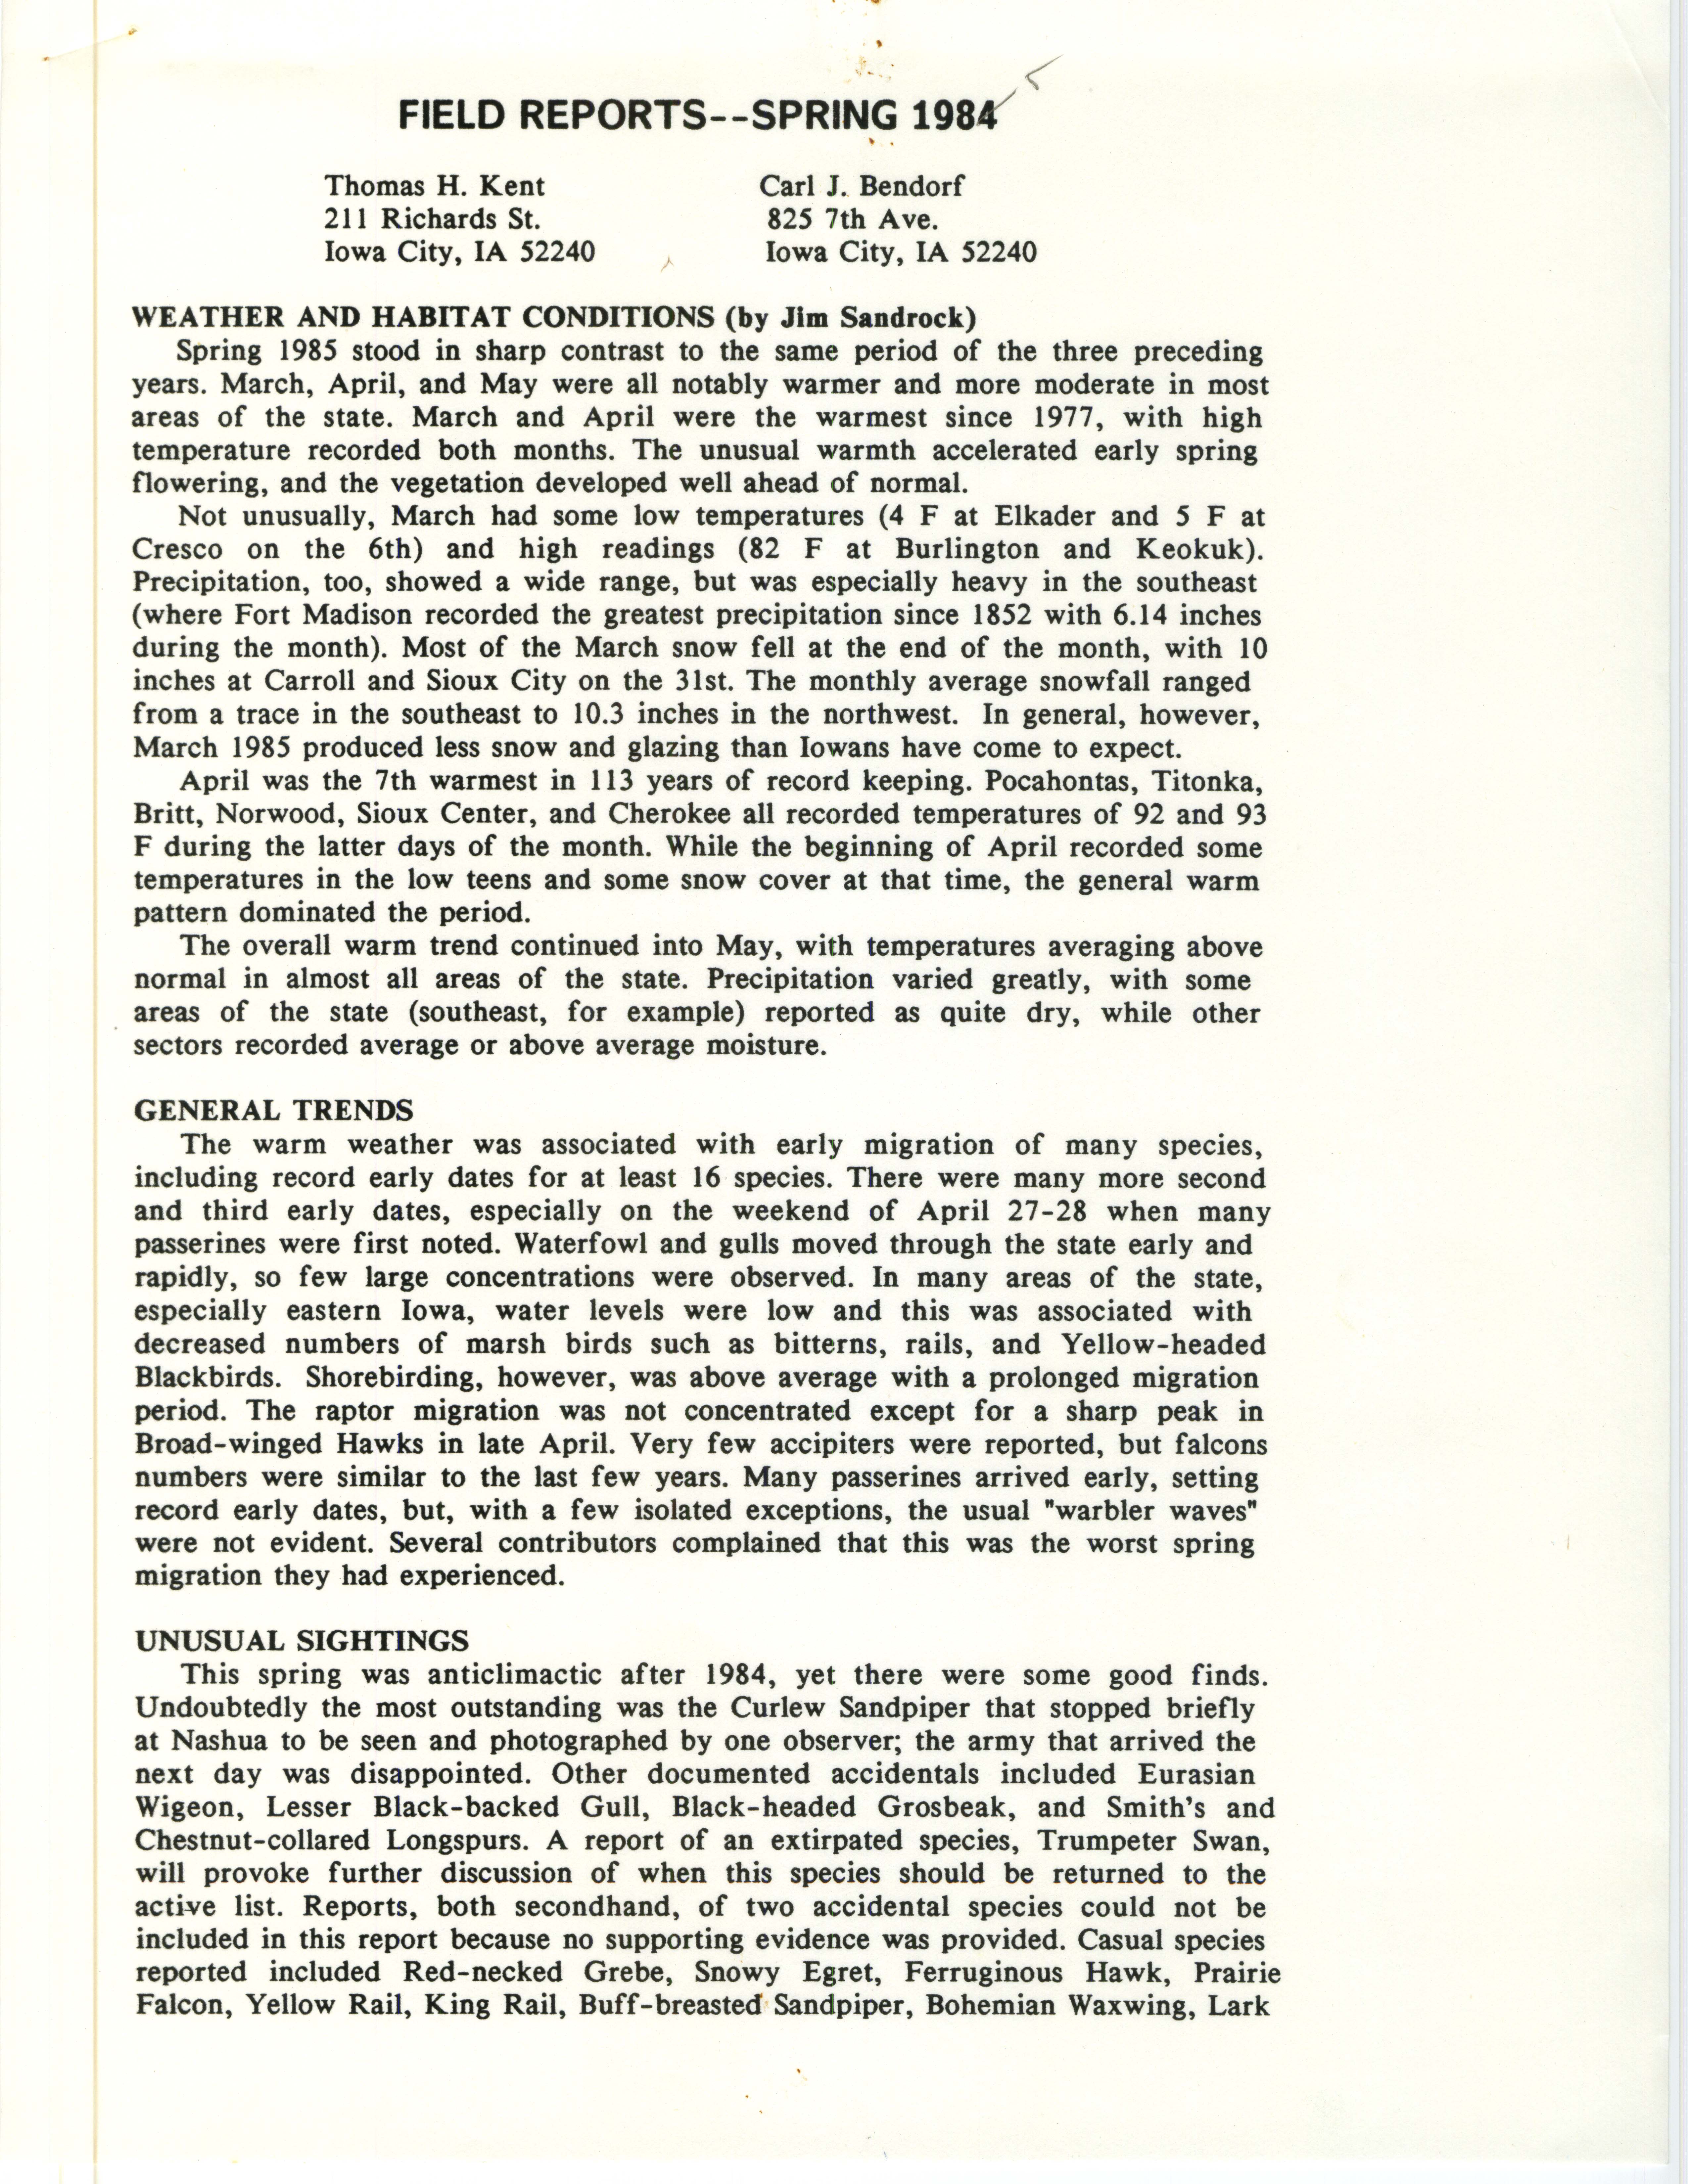 Iowa Ornithologists' Union, Quarterly field report, spring 1985